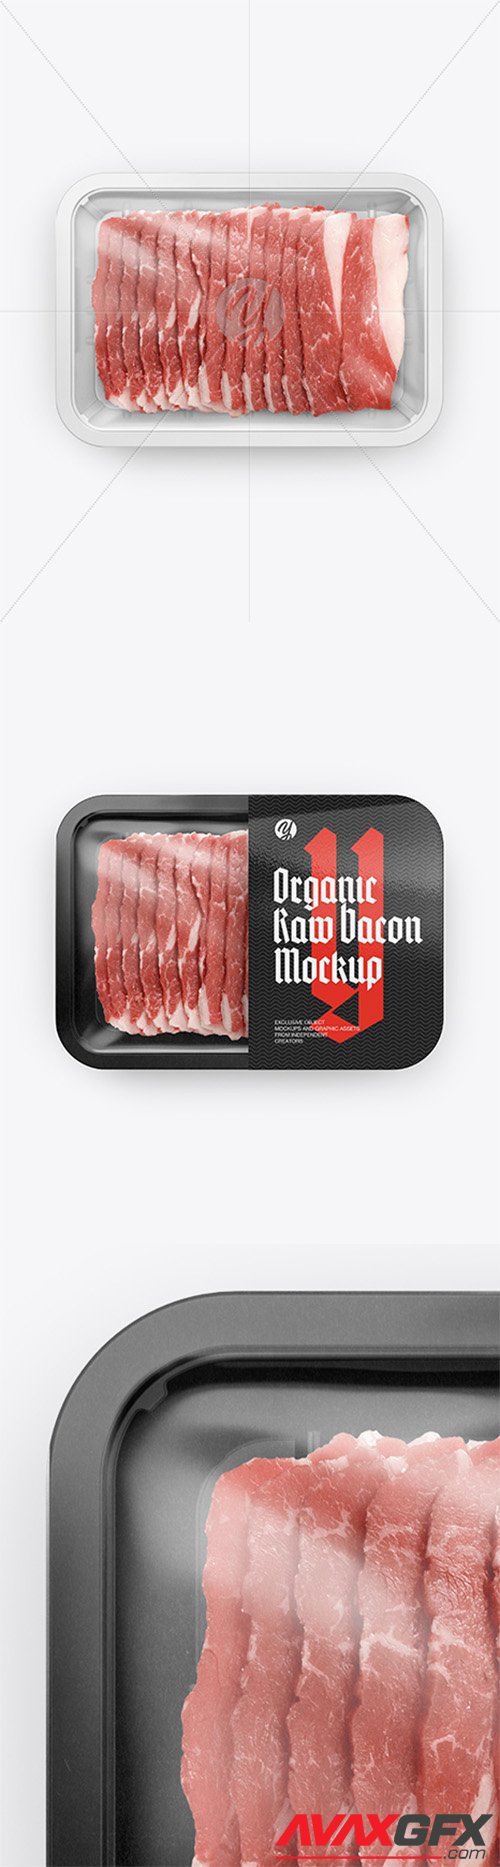 Plastic Tray With Raw Bacon Mockup 34242